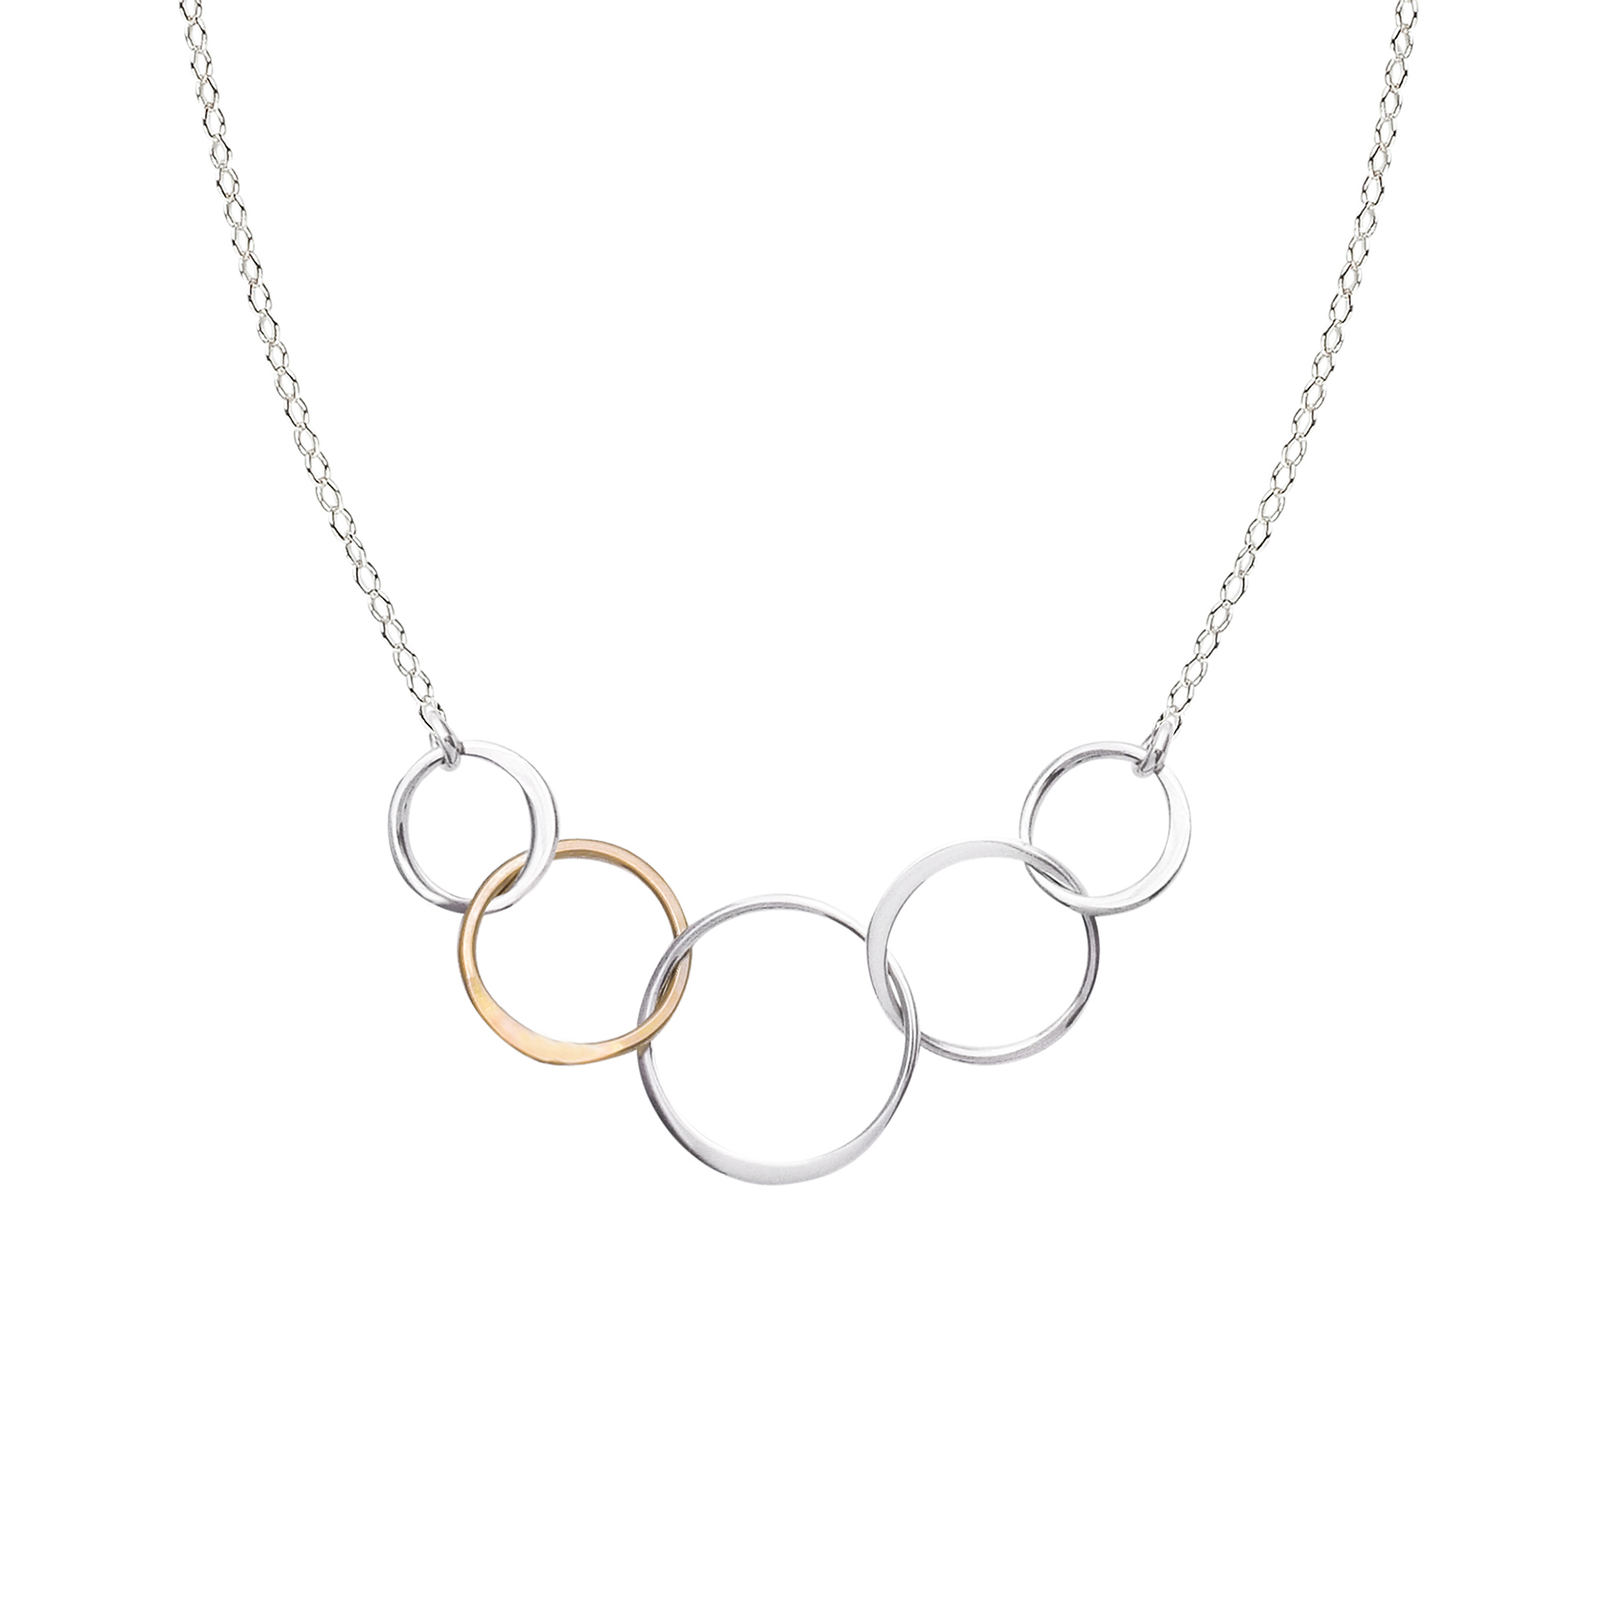 Interlocking Circle Necklace, Linked Rings Necklace, Double Circle Necklace,  Two Circle Gift for Mom Best Friend Sister Bridesmaid Partner - Etsy